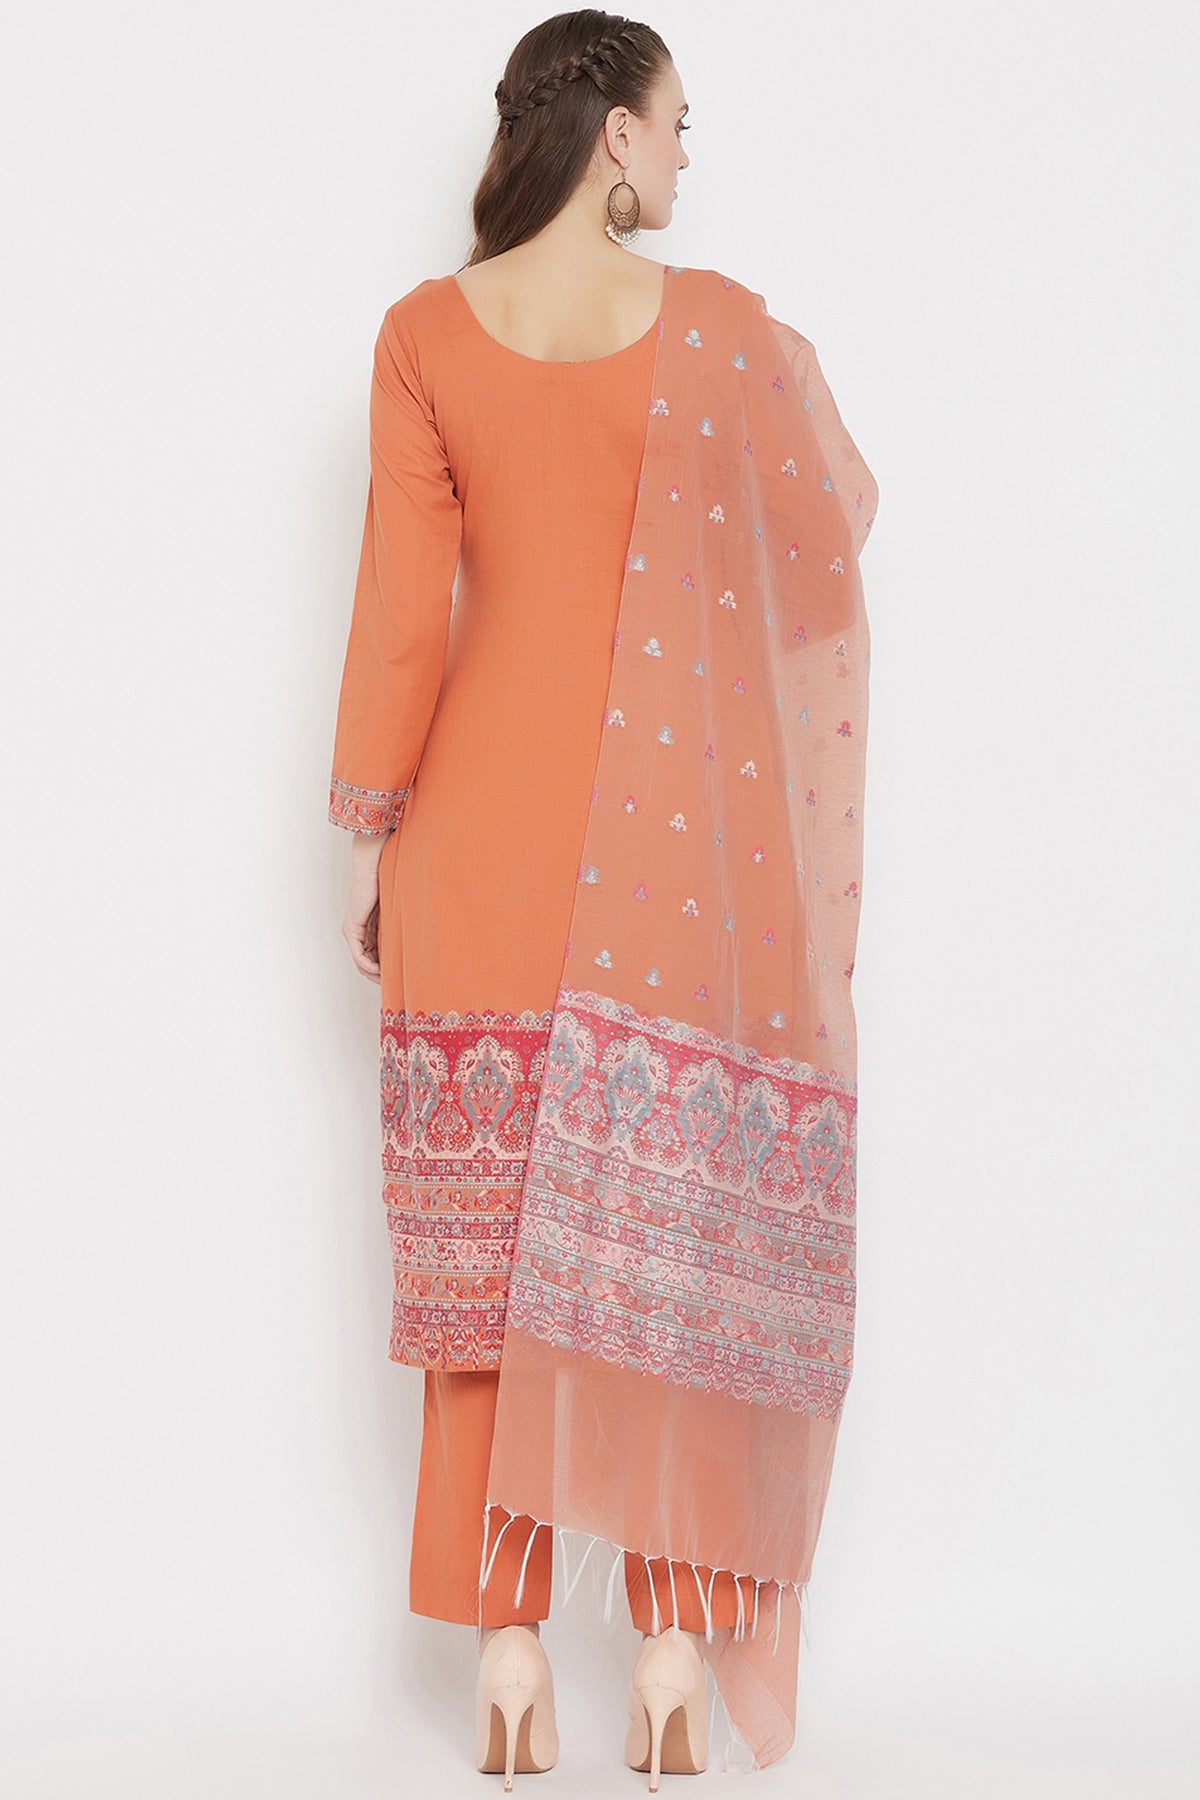 Cotton Kani Woven Orange Dress Material With Cotton Silk Dupatta